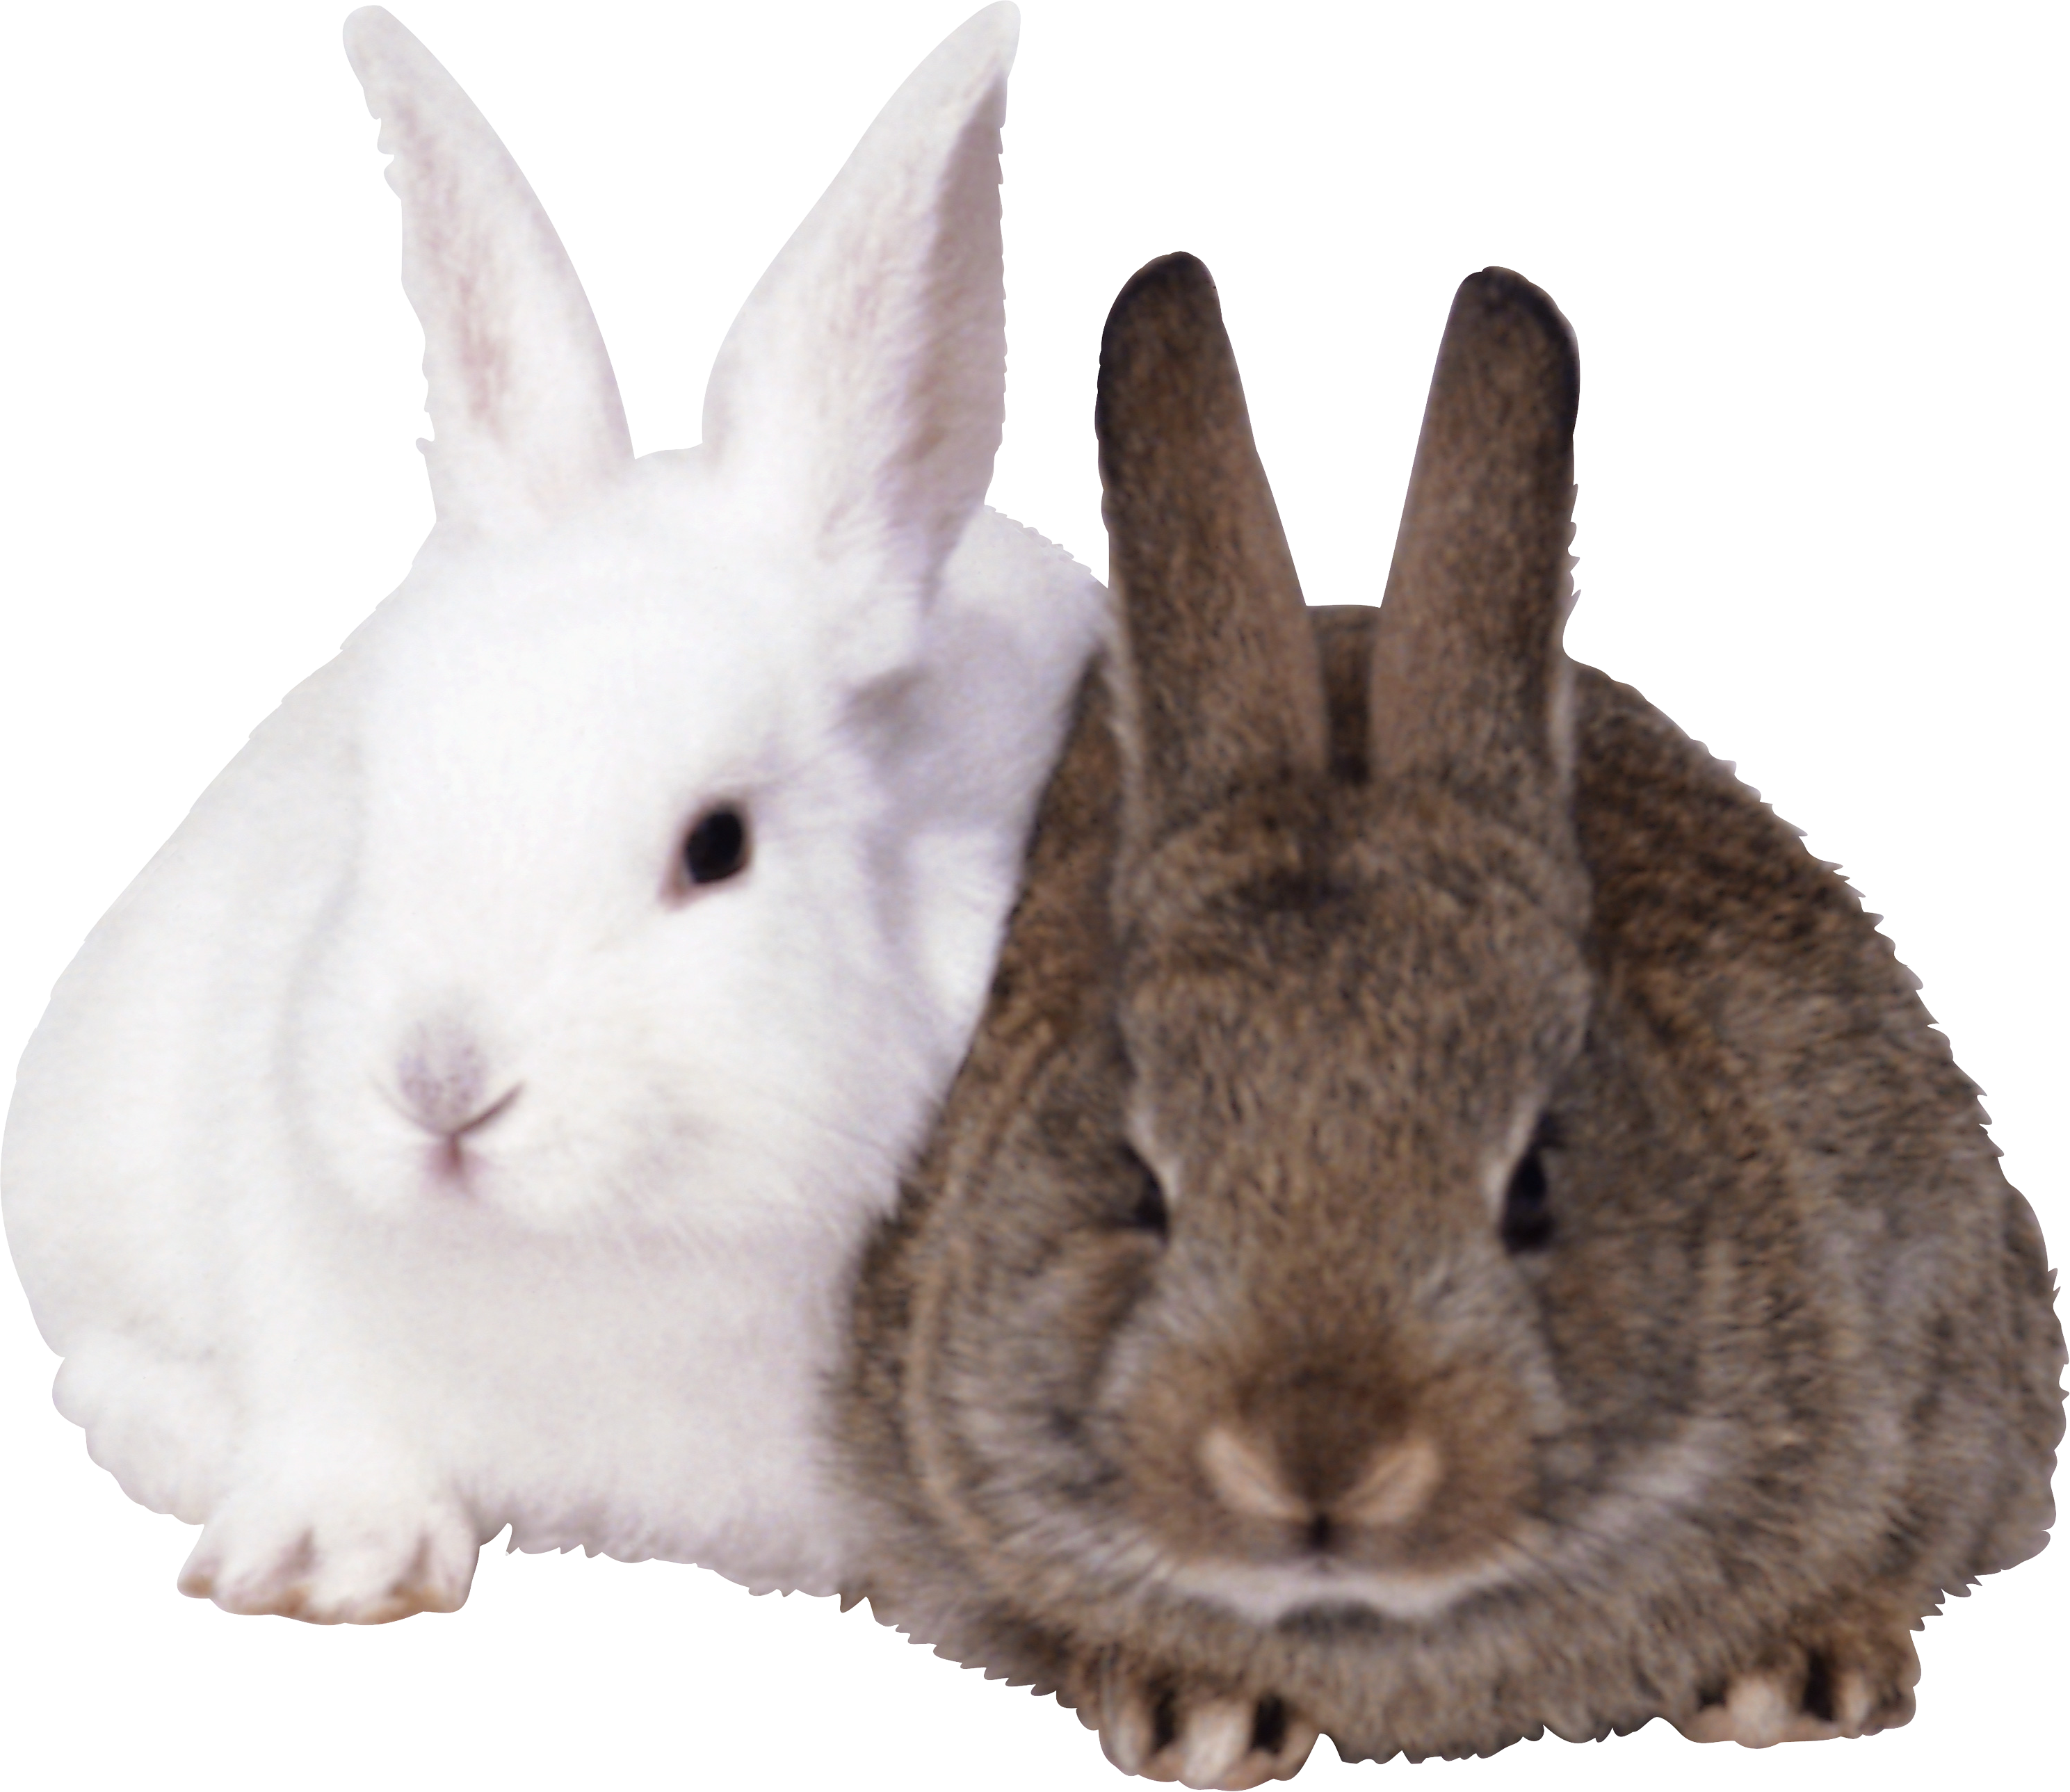 Rabbit Facts